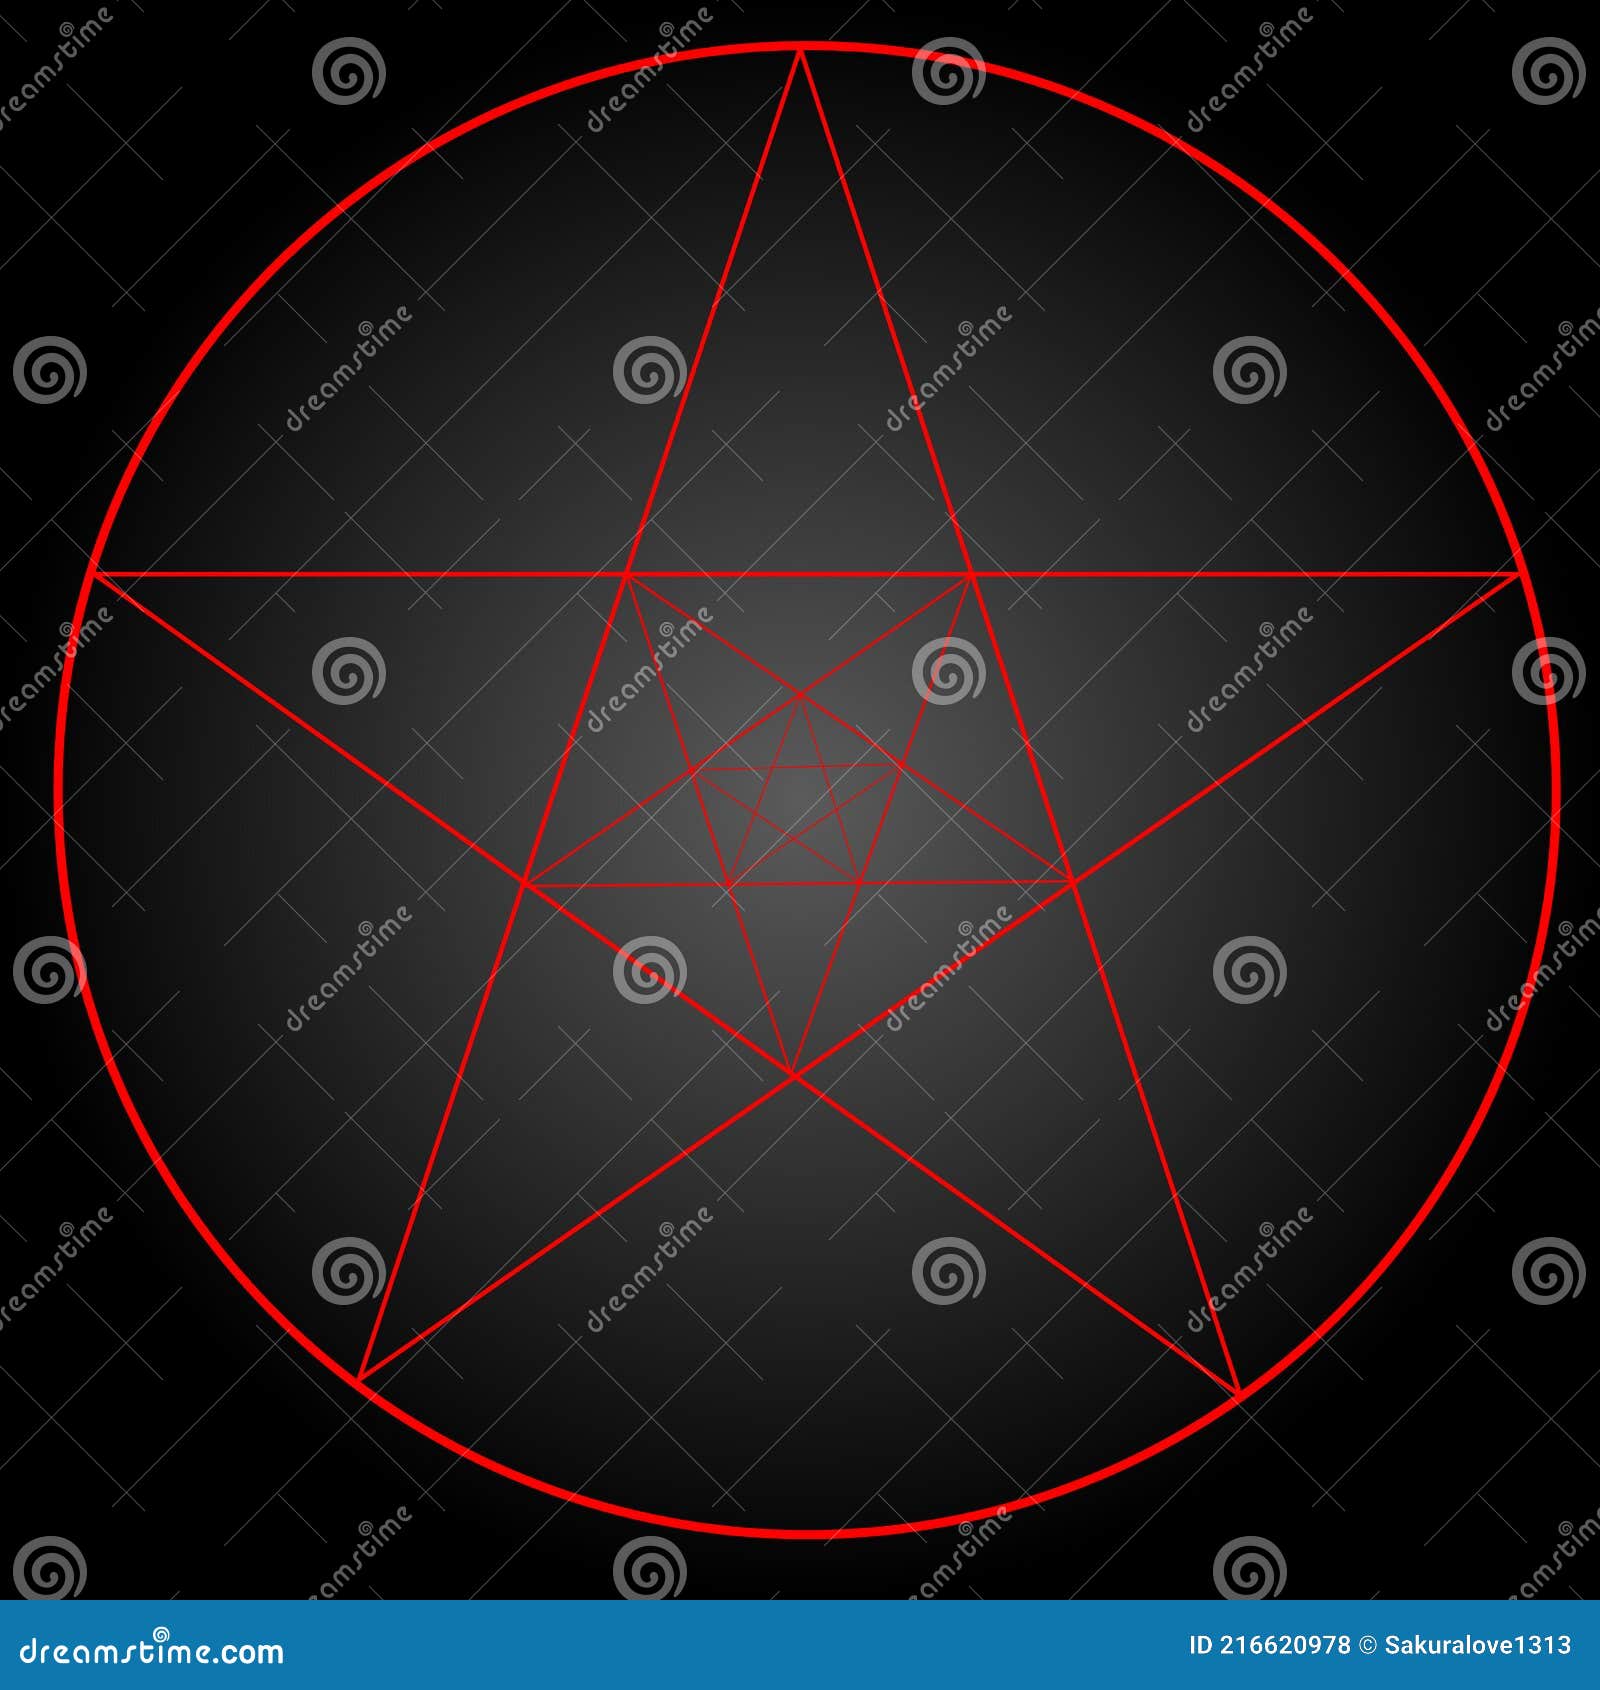 pentagram or pentalpha or pentangle. dot work ancient pagan  of five-pointed star  . black